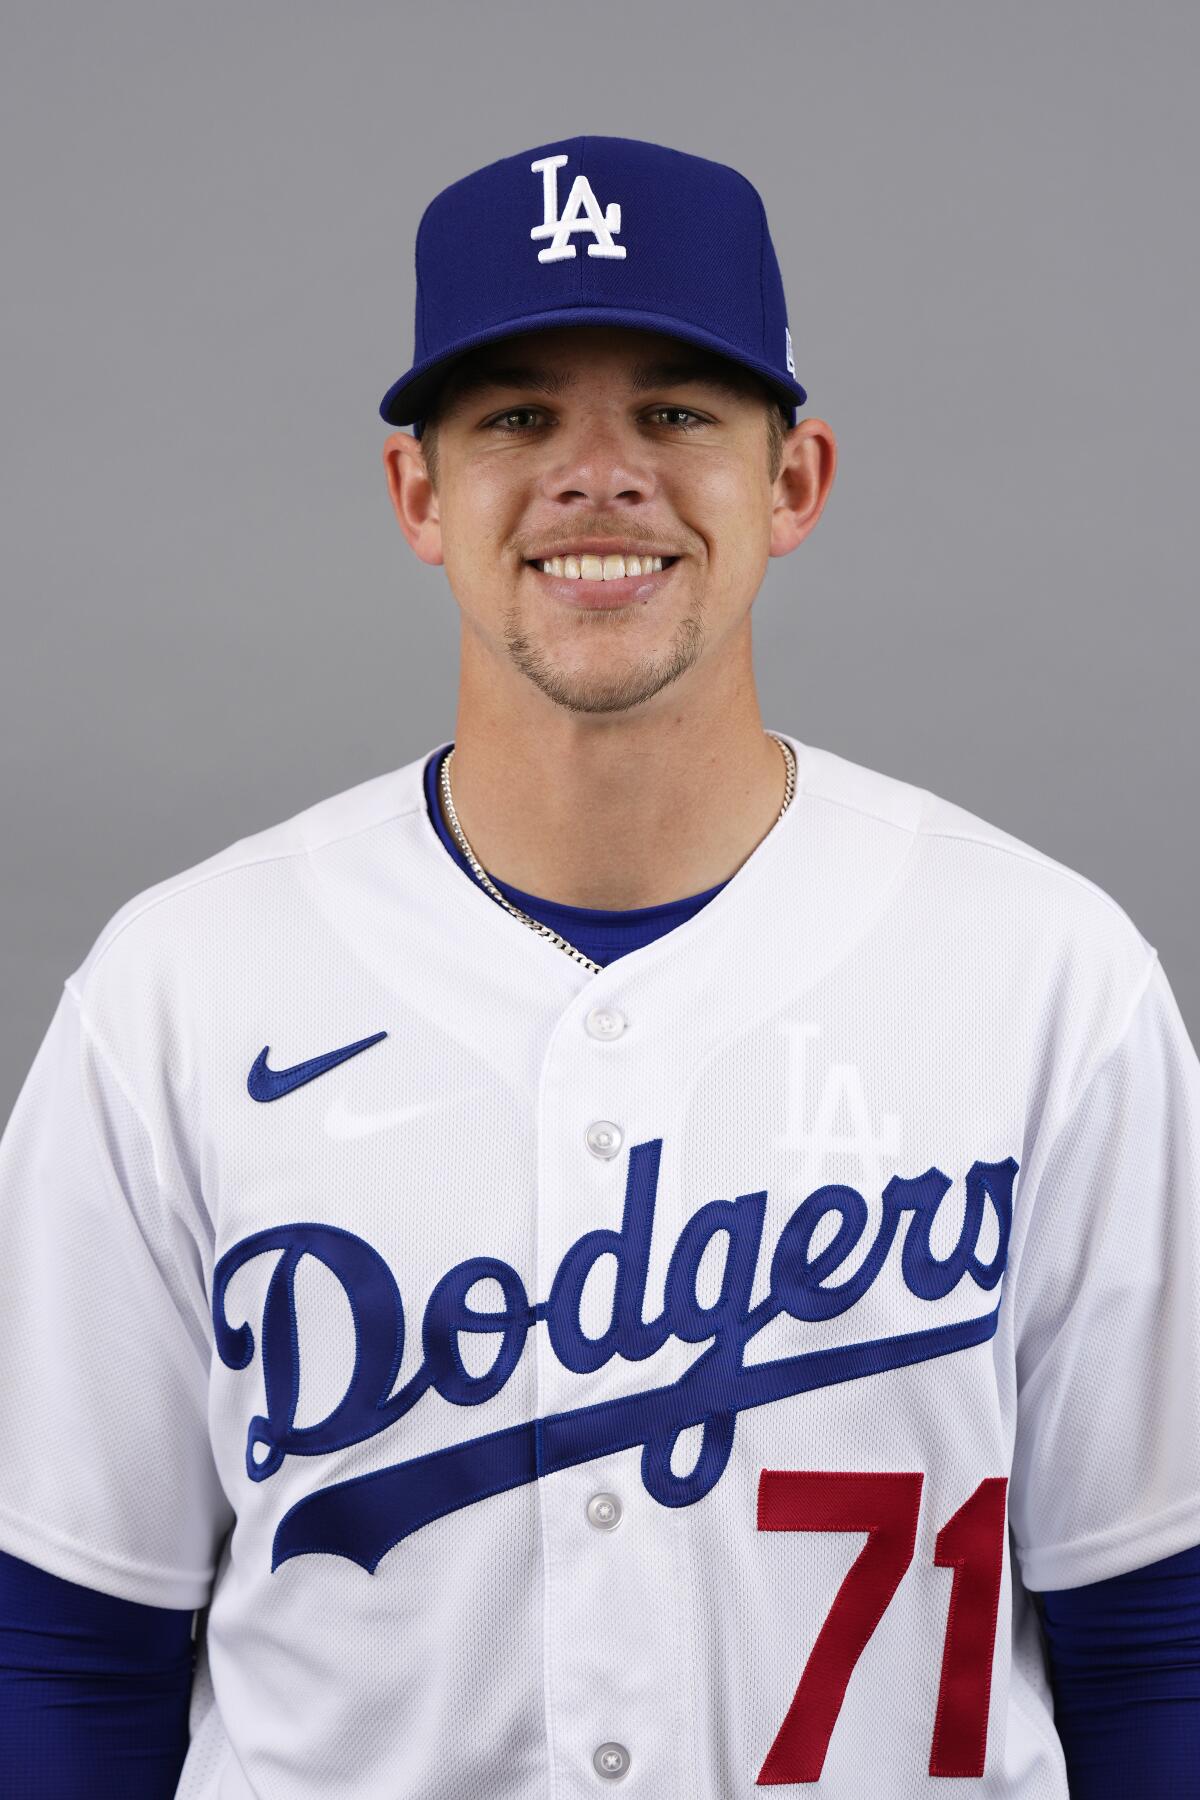 Dodgers pitching prospect Gavin Stone portrait.